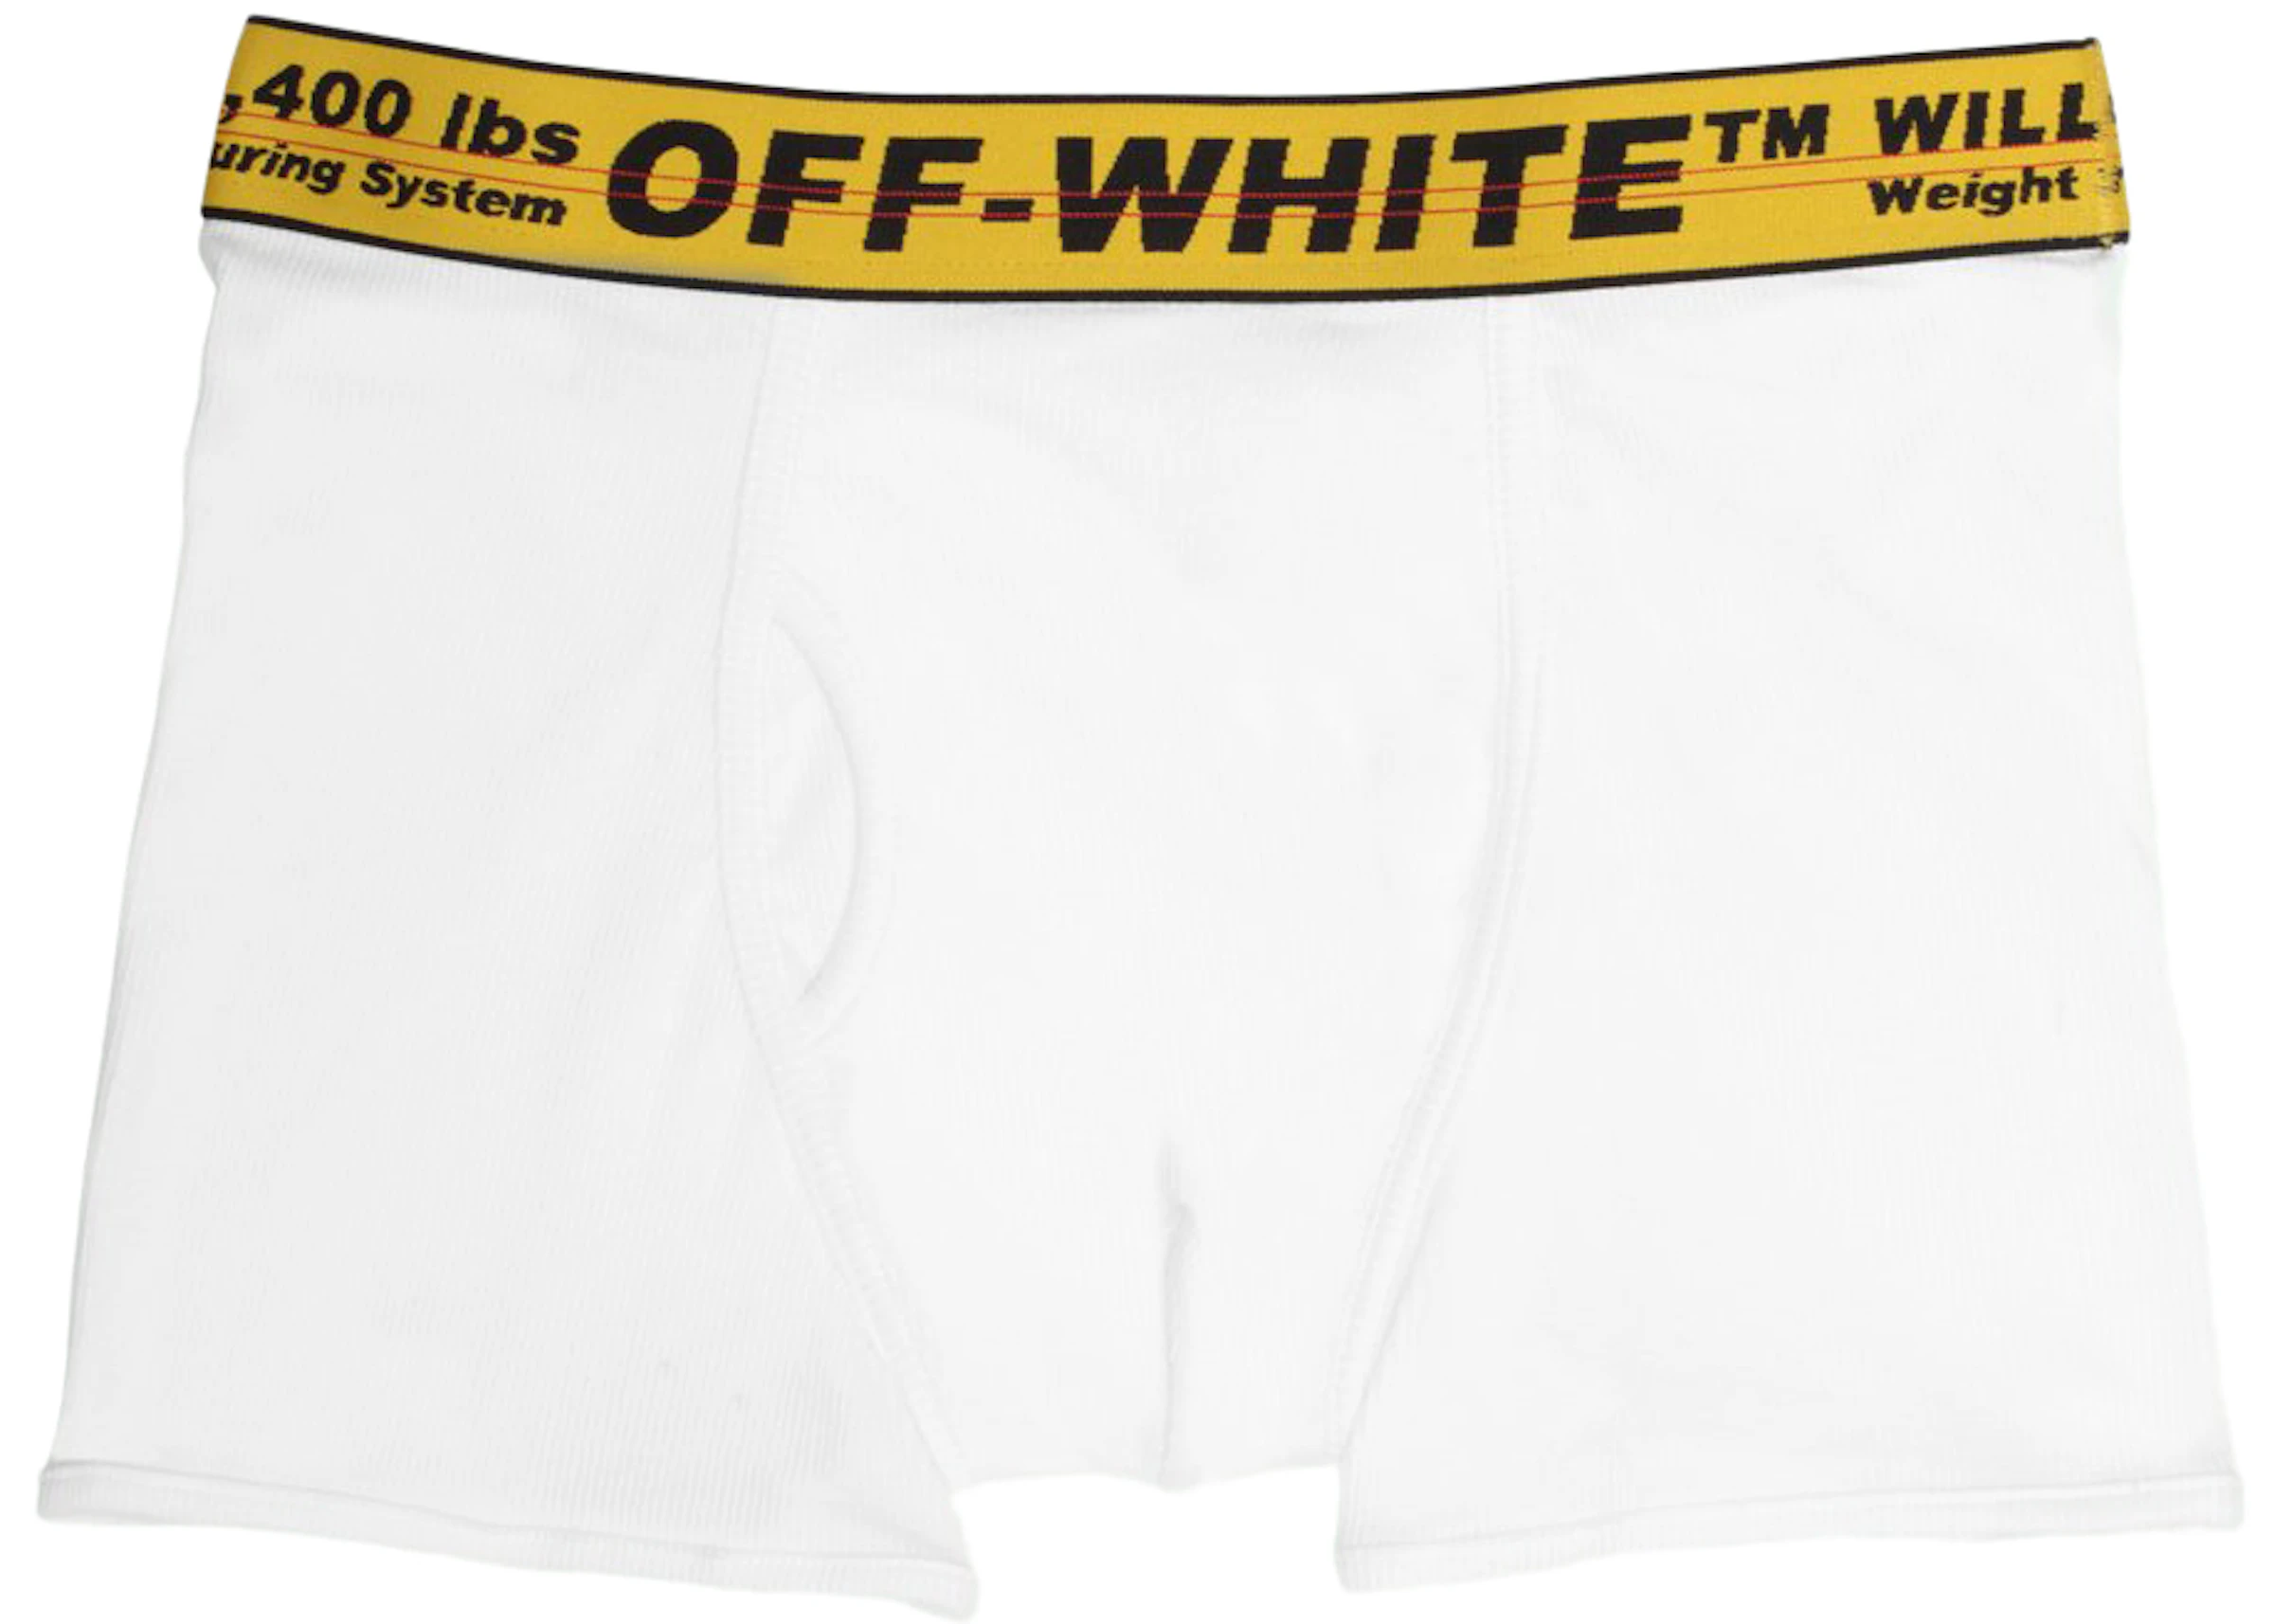 OFF-WHITE Single Pack Stretch Cotton Boxer Briefs White/Yellow/Black - US